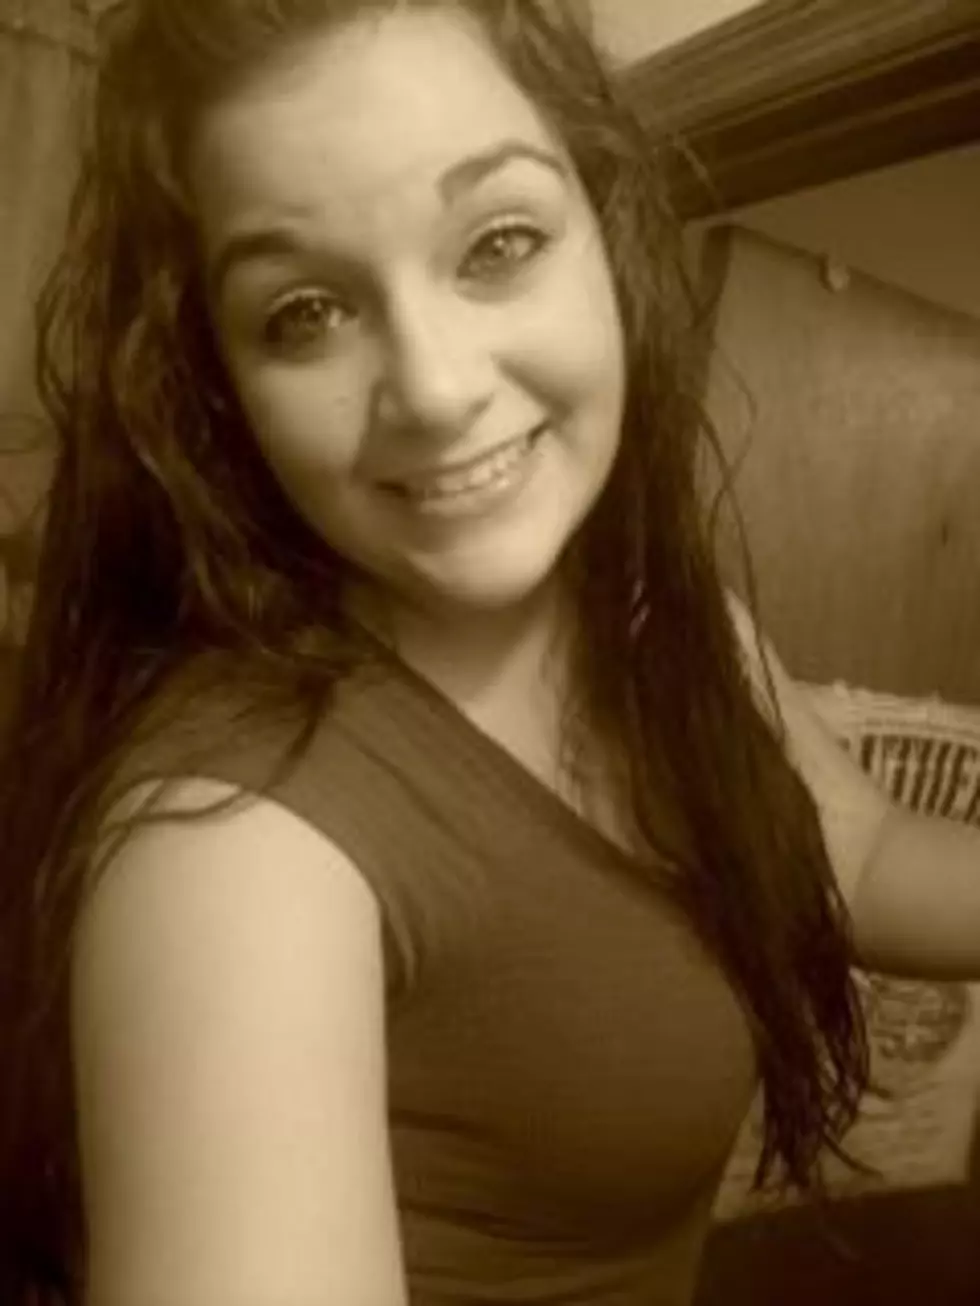 UPDATED: Missing Oneida County Teen Amanda Akins FOUND [PHOTOS]